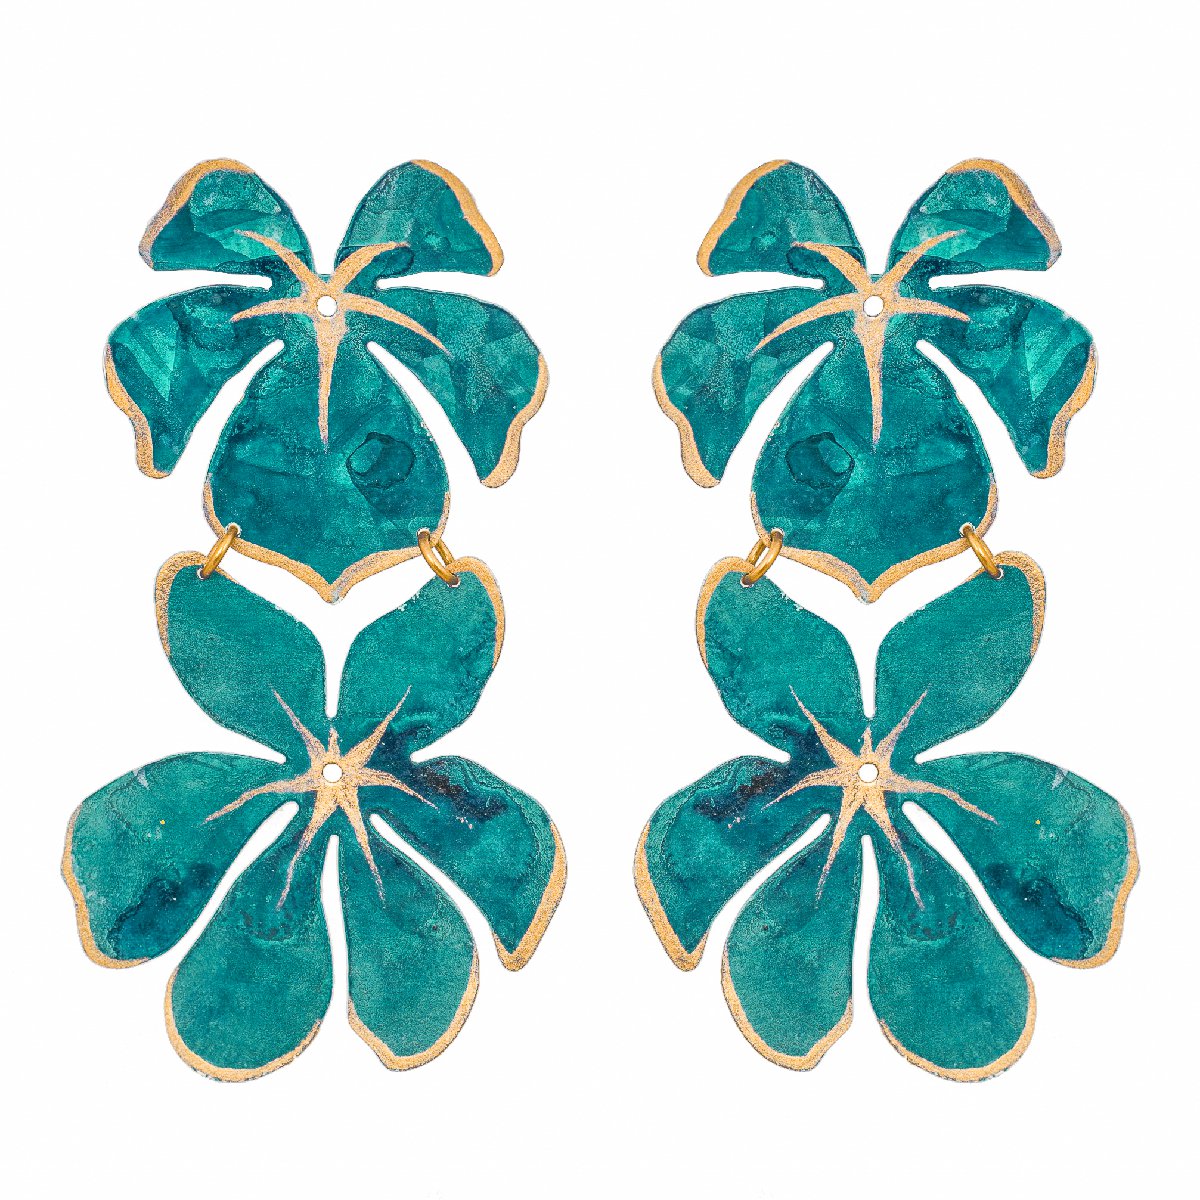 We Dream in Colour jewellery | grand tahiti earrings